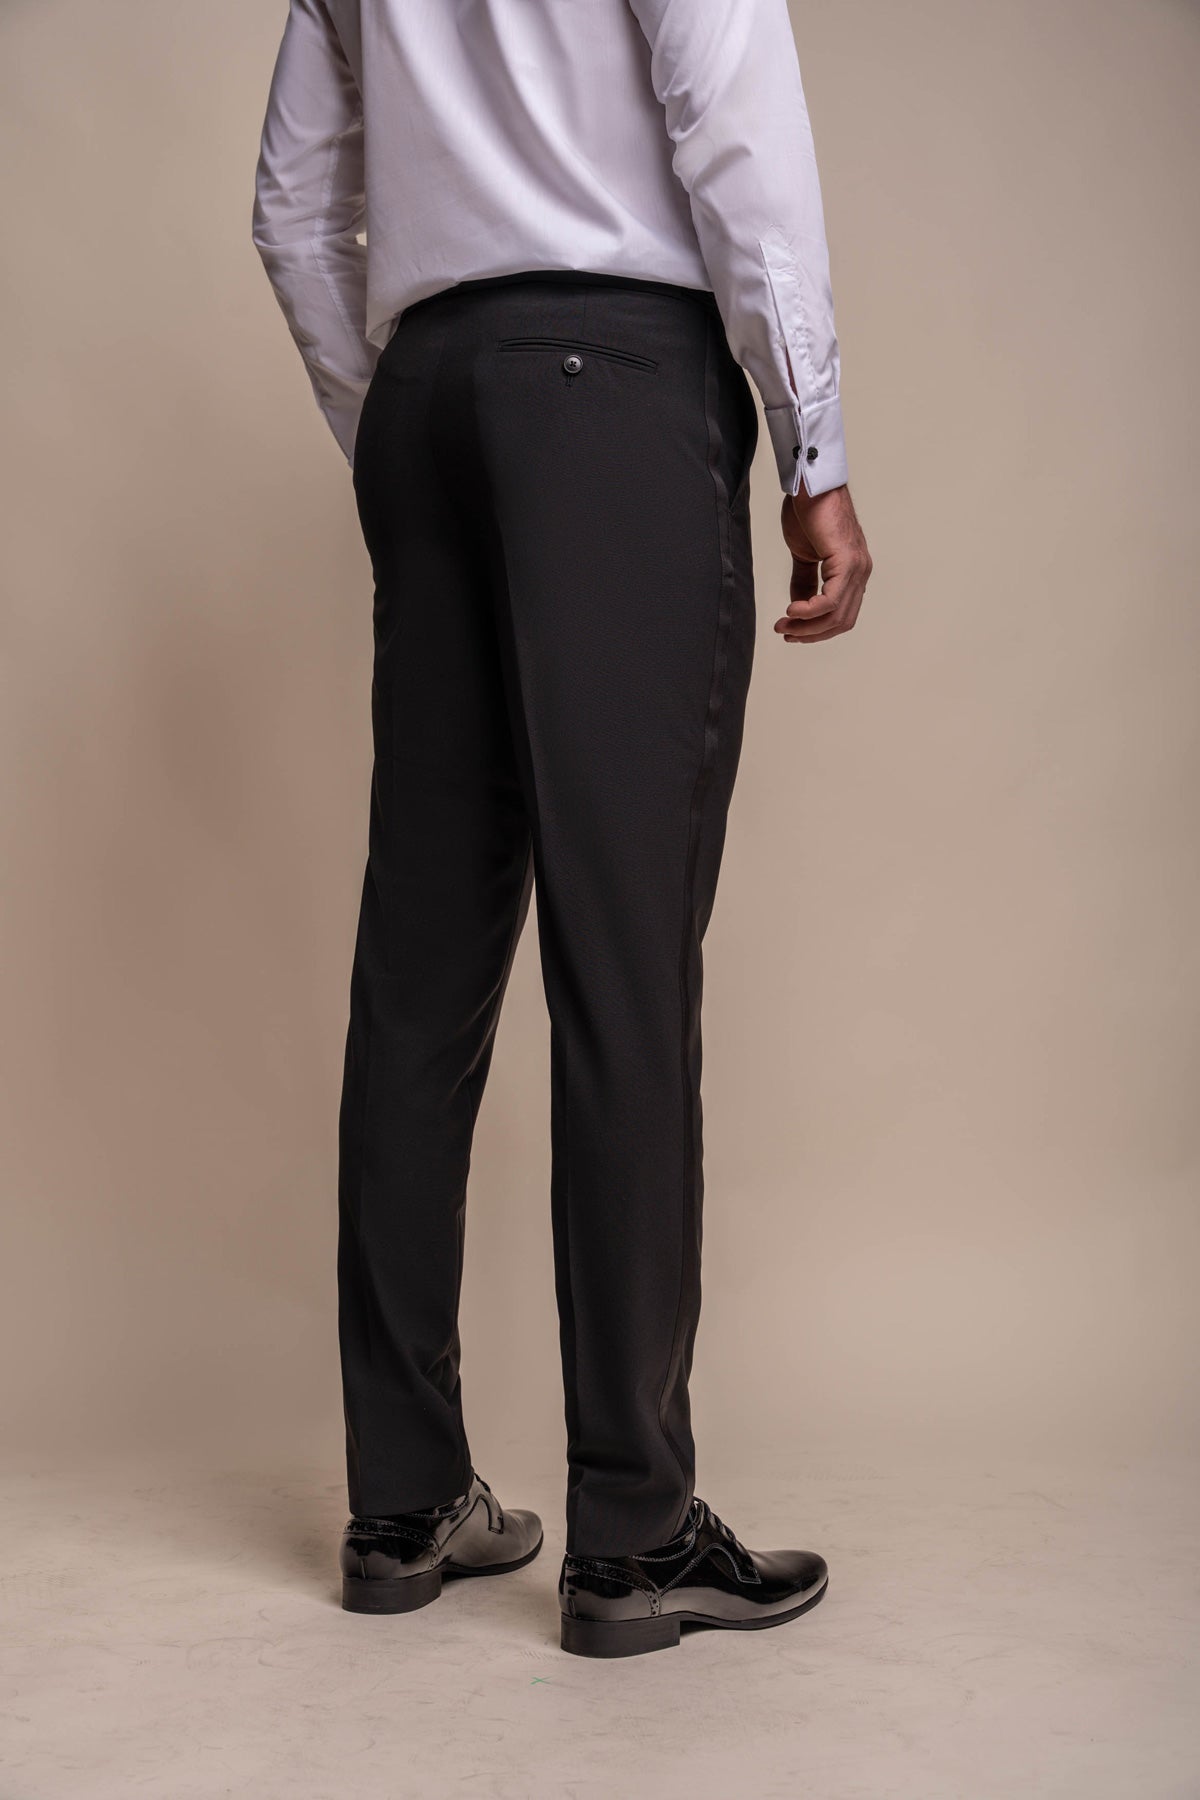 Aspen Black Tuxedo Trousers - Trousers - 28R - Swagger & Swoon